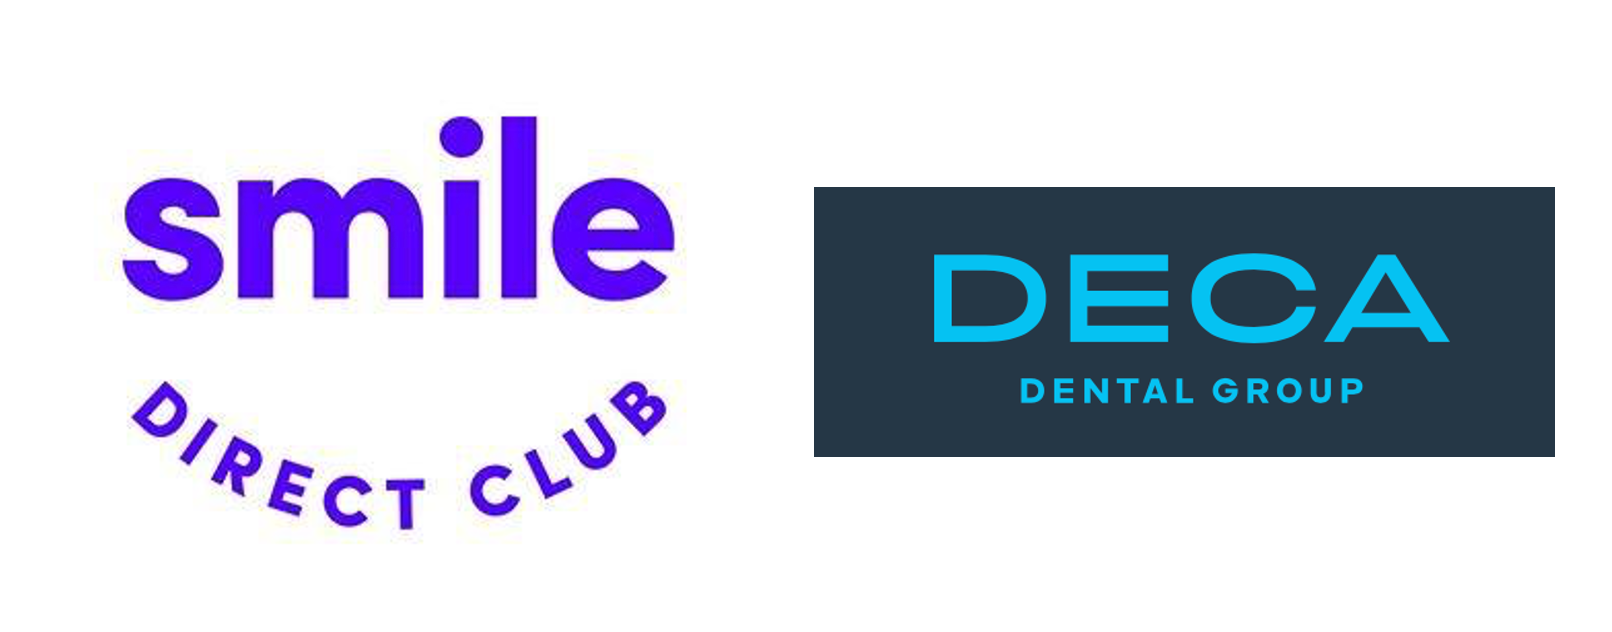 SmileDirectClub and DECA Dental form partnership